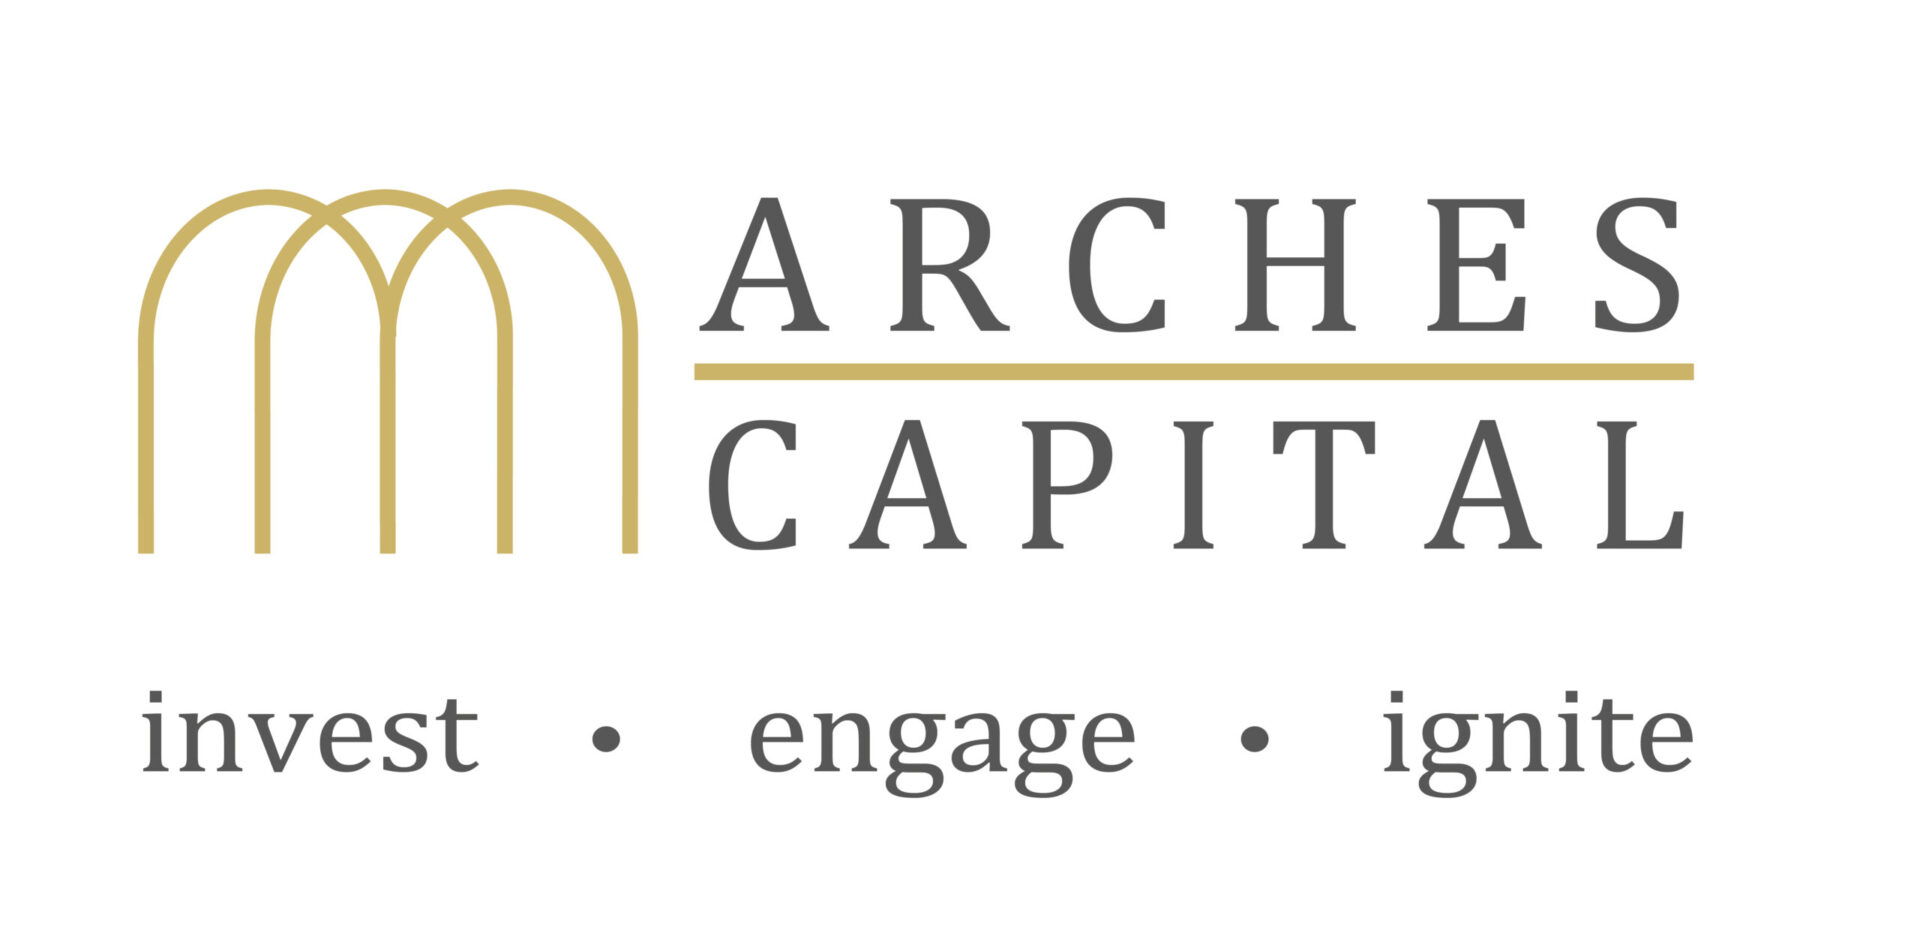 Arches capital logo